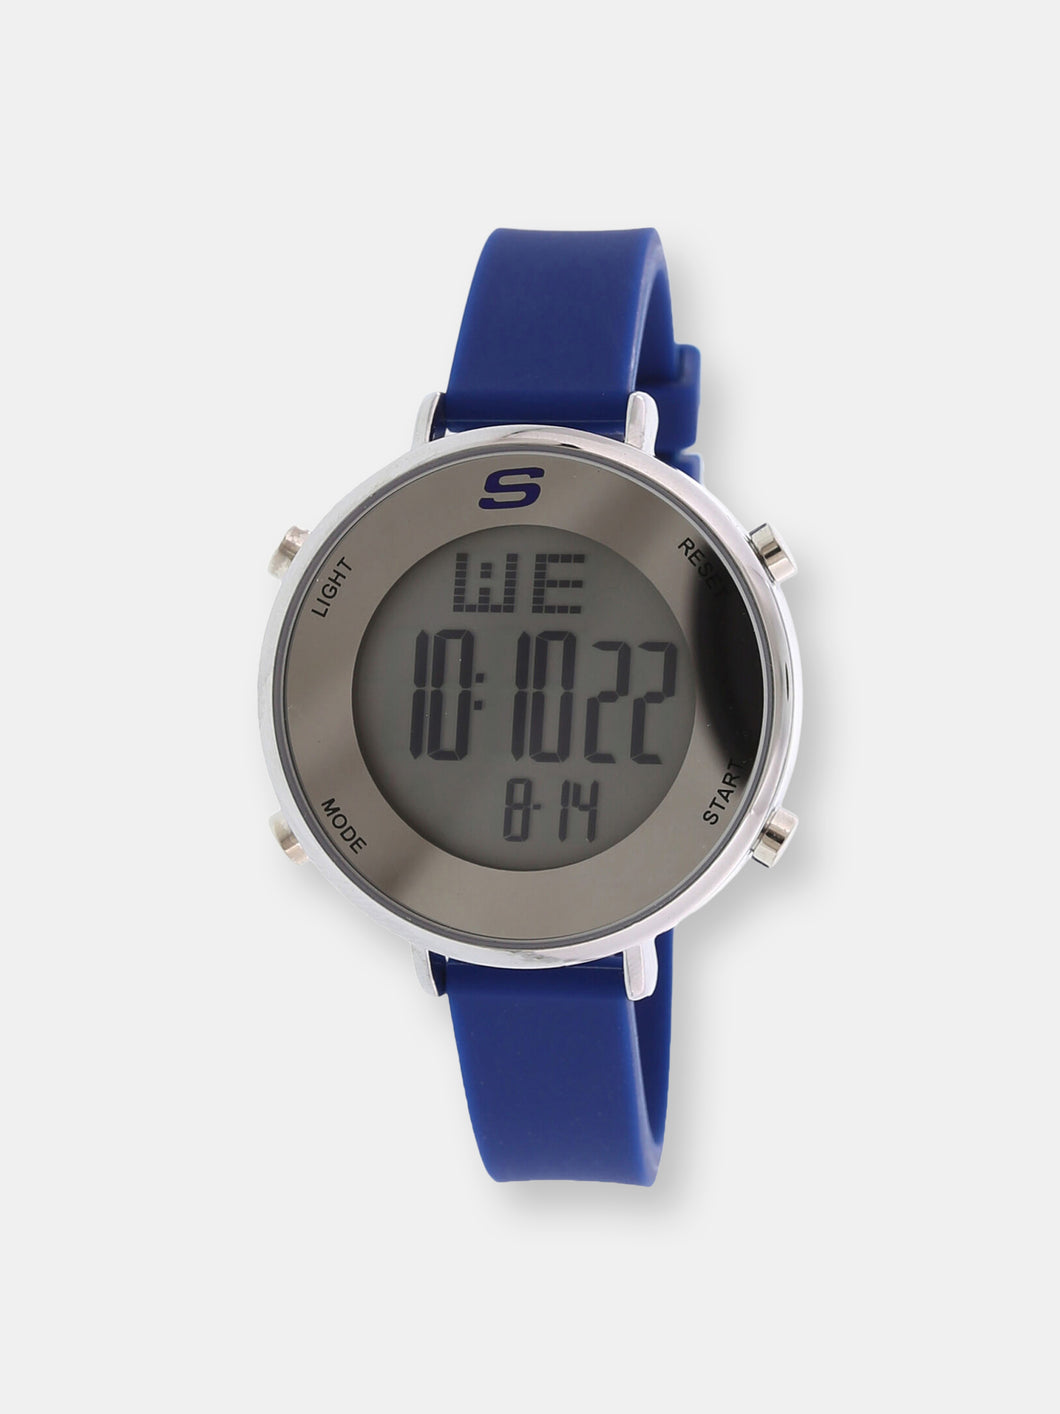 Skechers Watch  SR6067 Magnolia Digital Display Calendar, Back Light, Alarm, Chronograph Stainless Steel / Blue